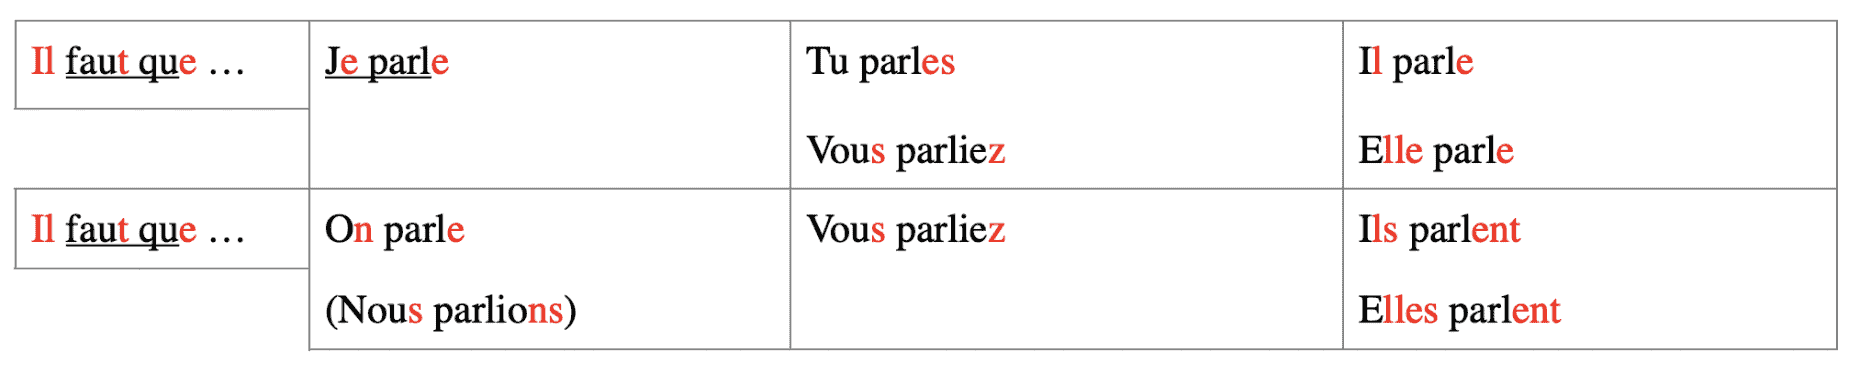 french conjugation chart